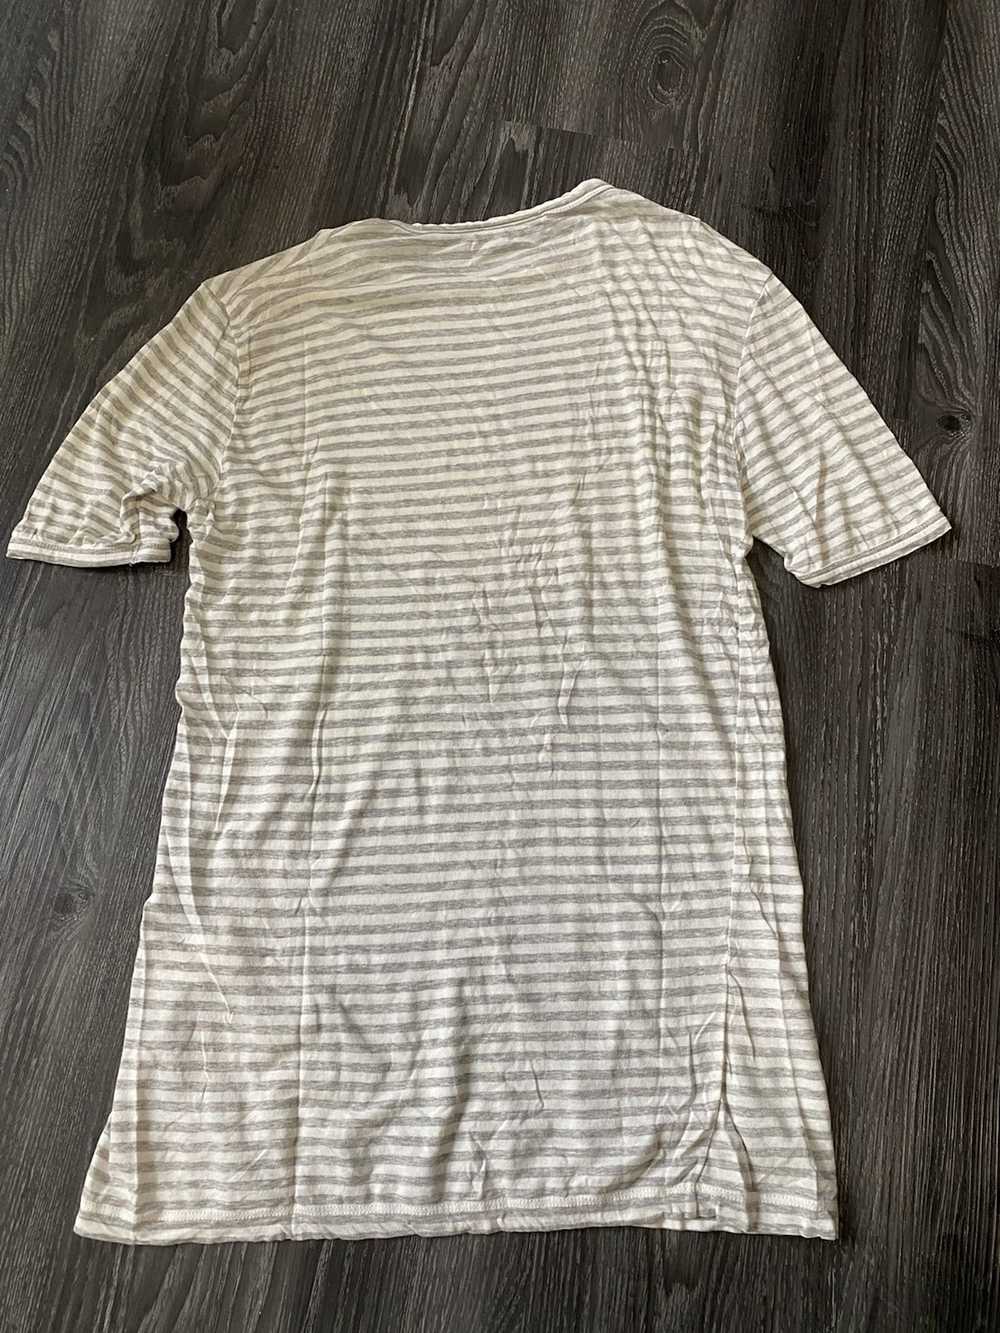 Raf Simons SS07 Striped R Shirt - image 4